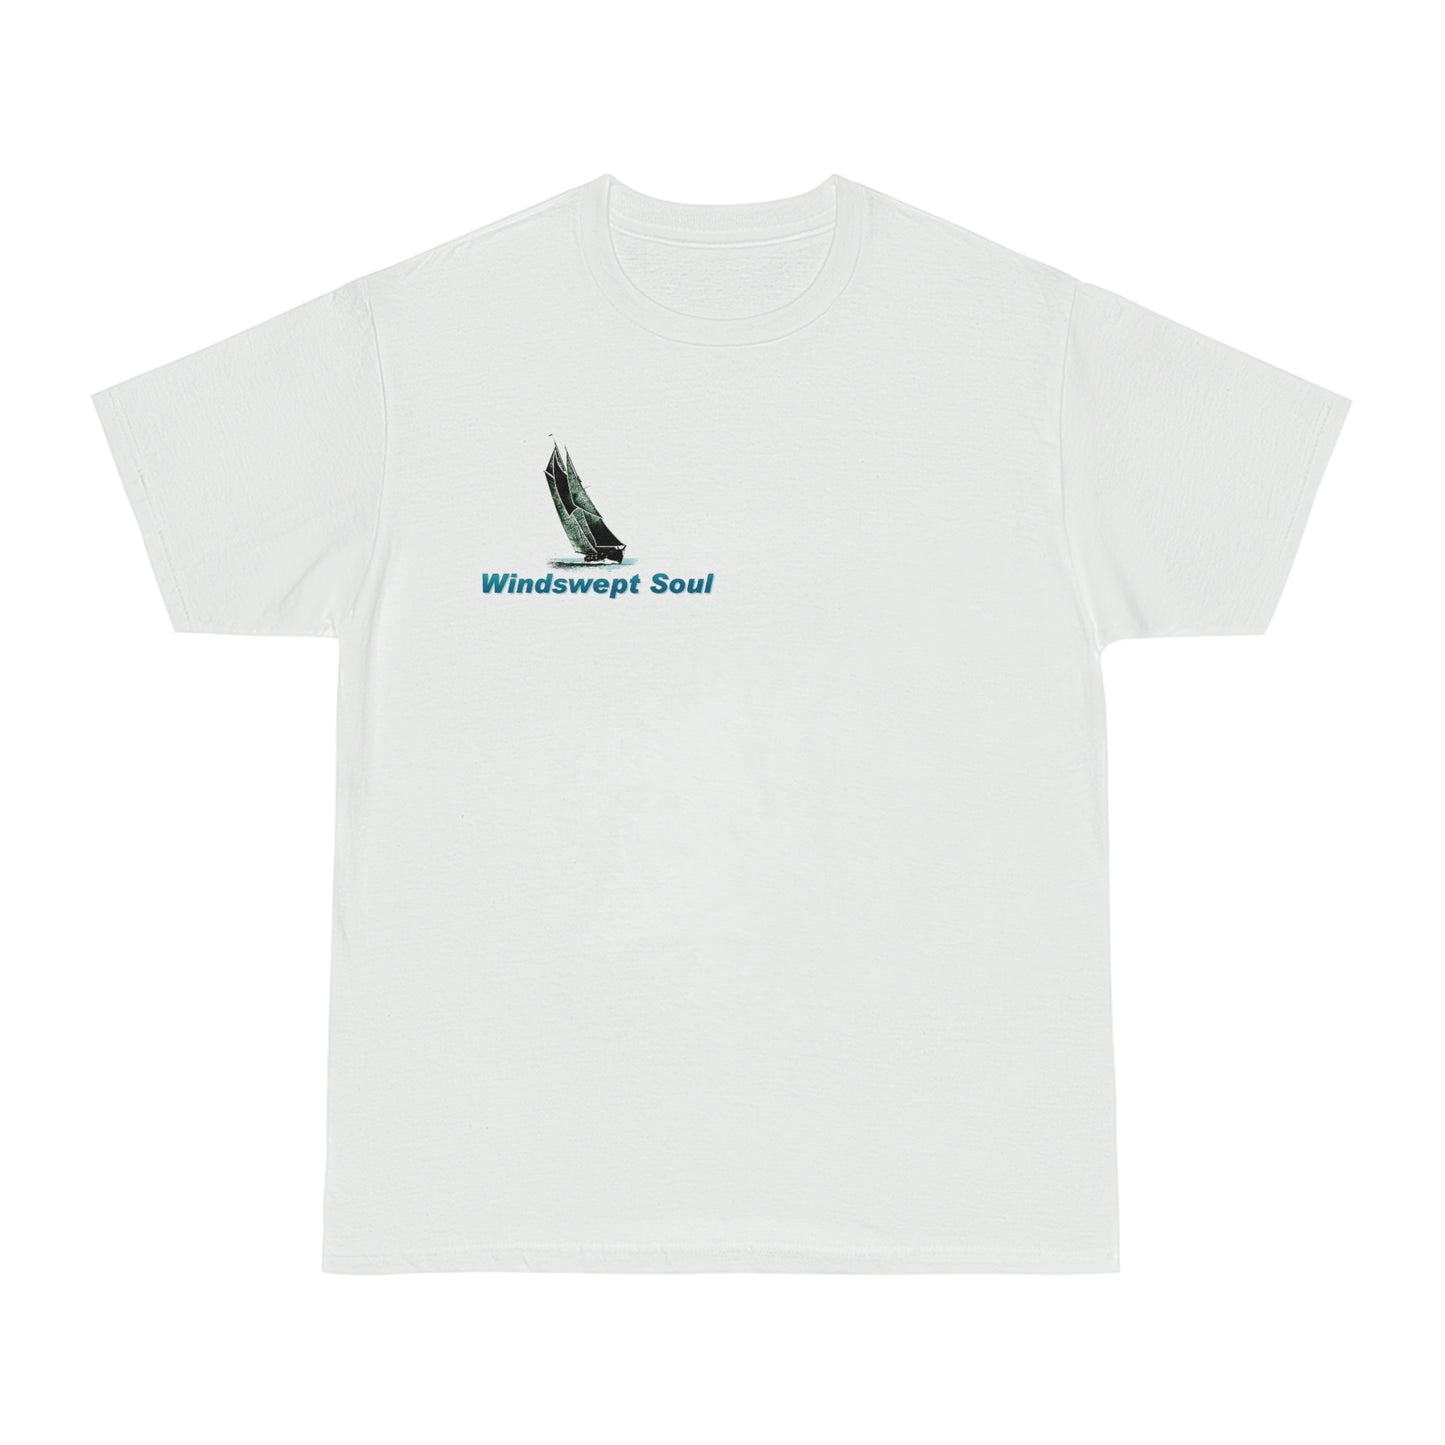 Windswept Soul T-Shirt.  Bluenose Sailboat.  Unisex Hammer™ T-shirt